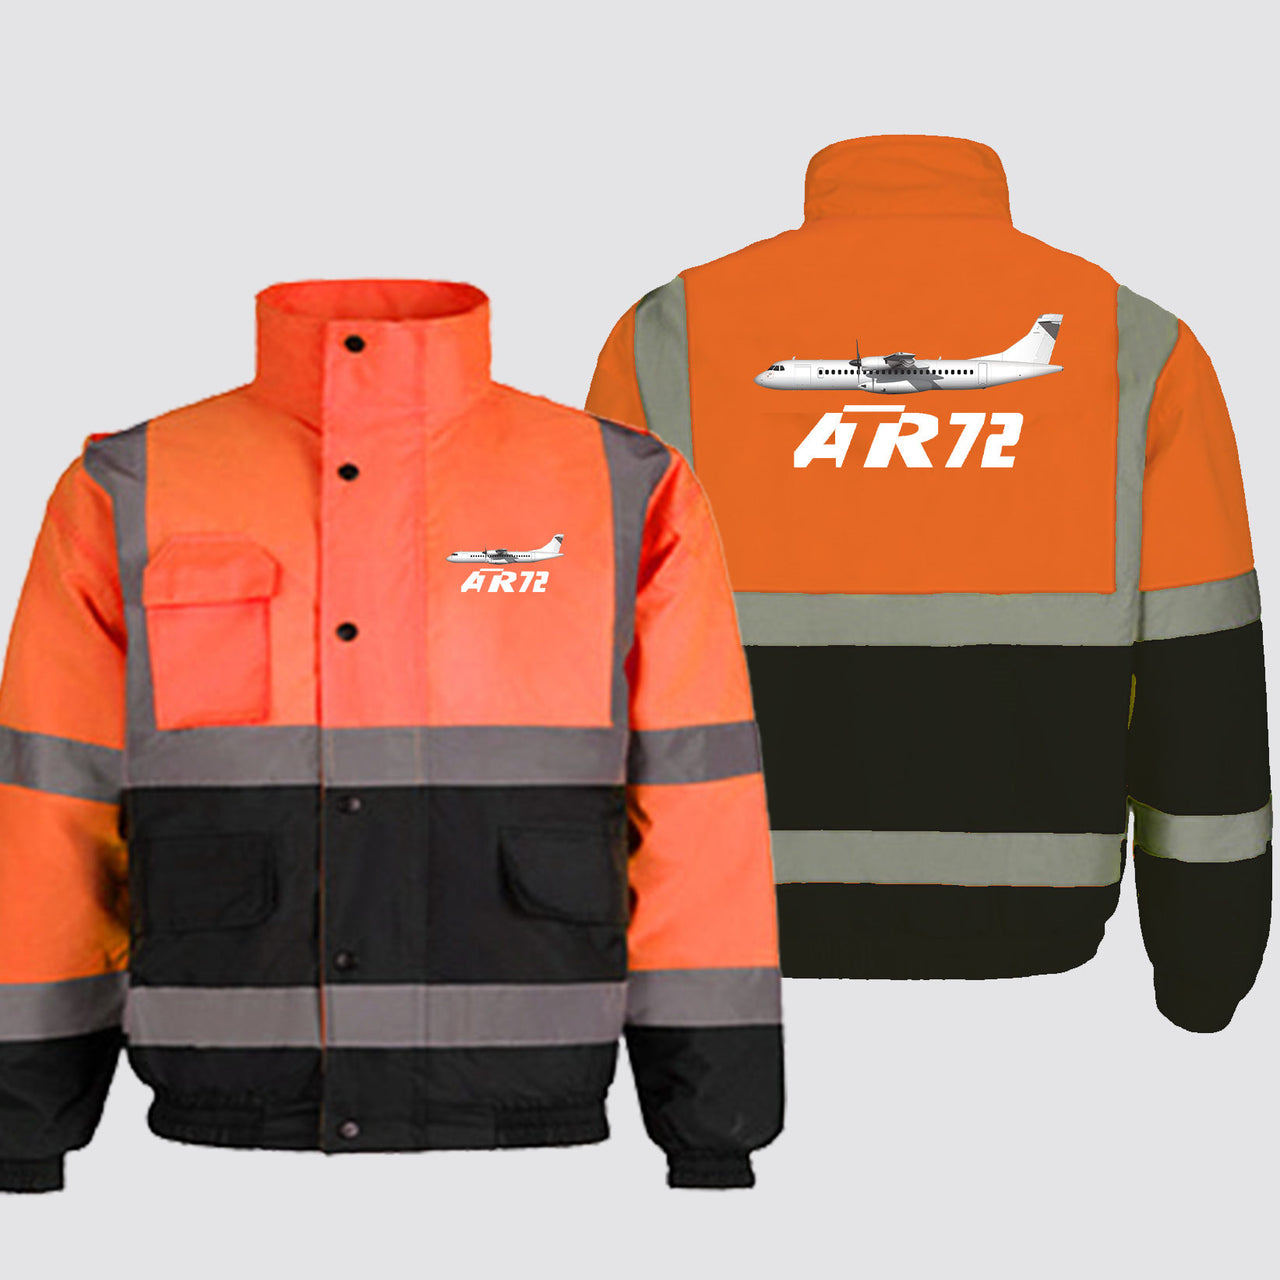 The ATR72 Designed Reflective Winter Jackets